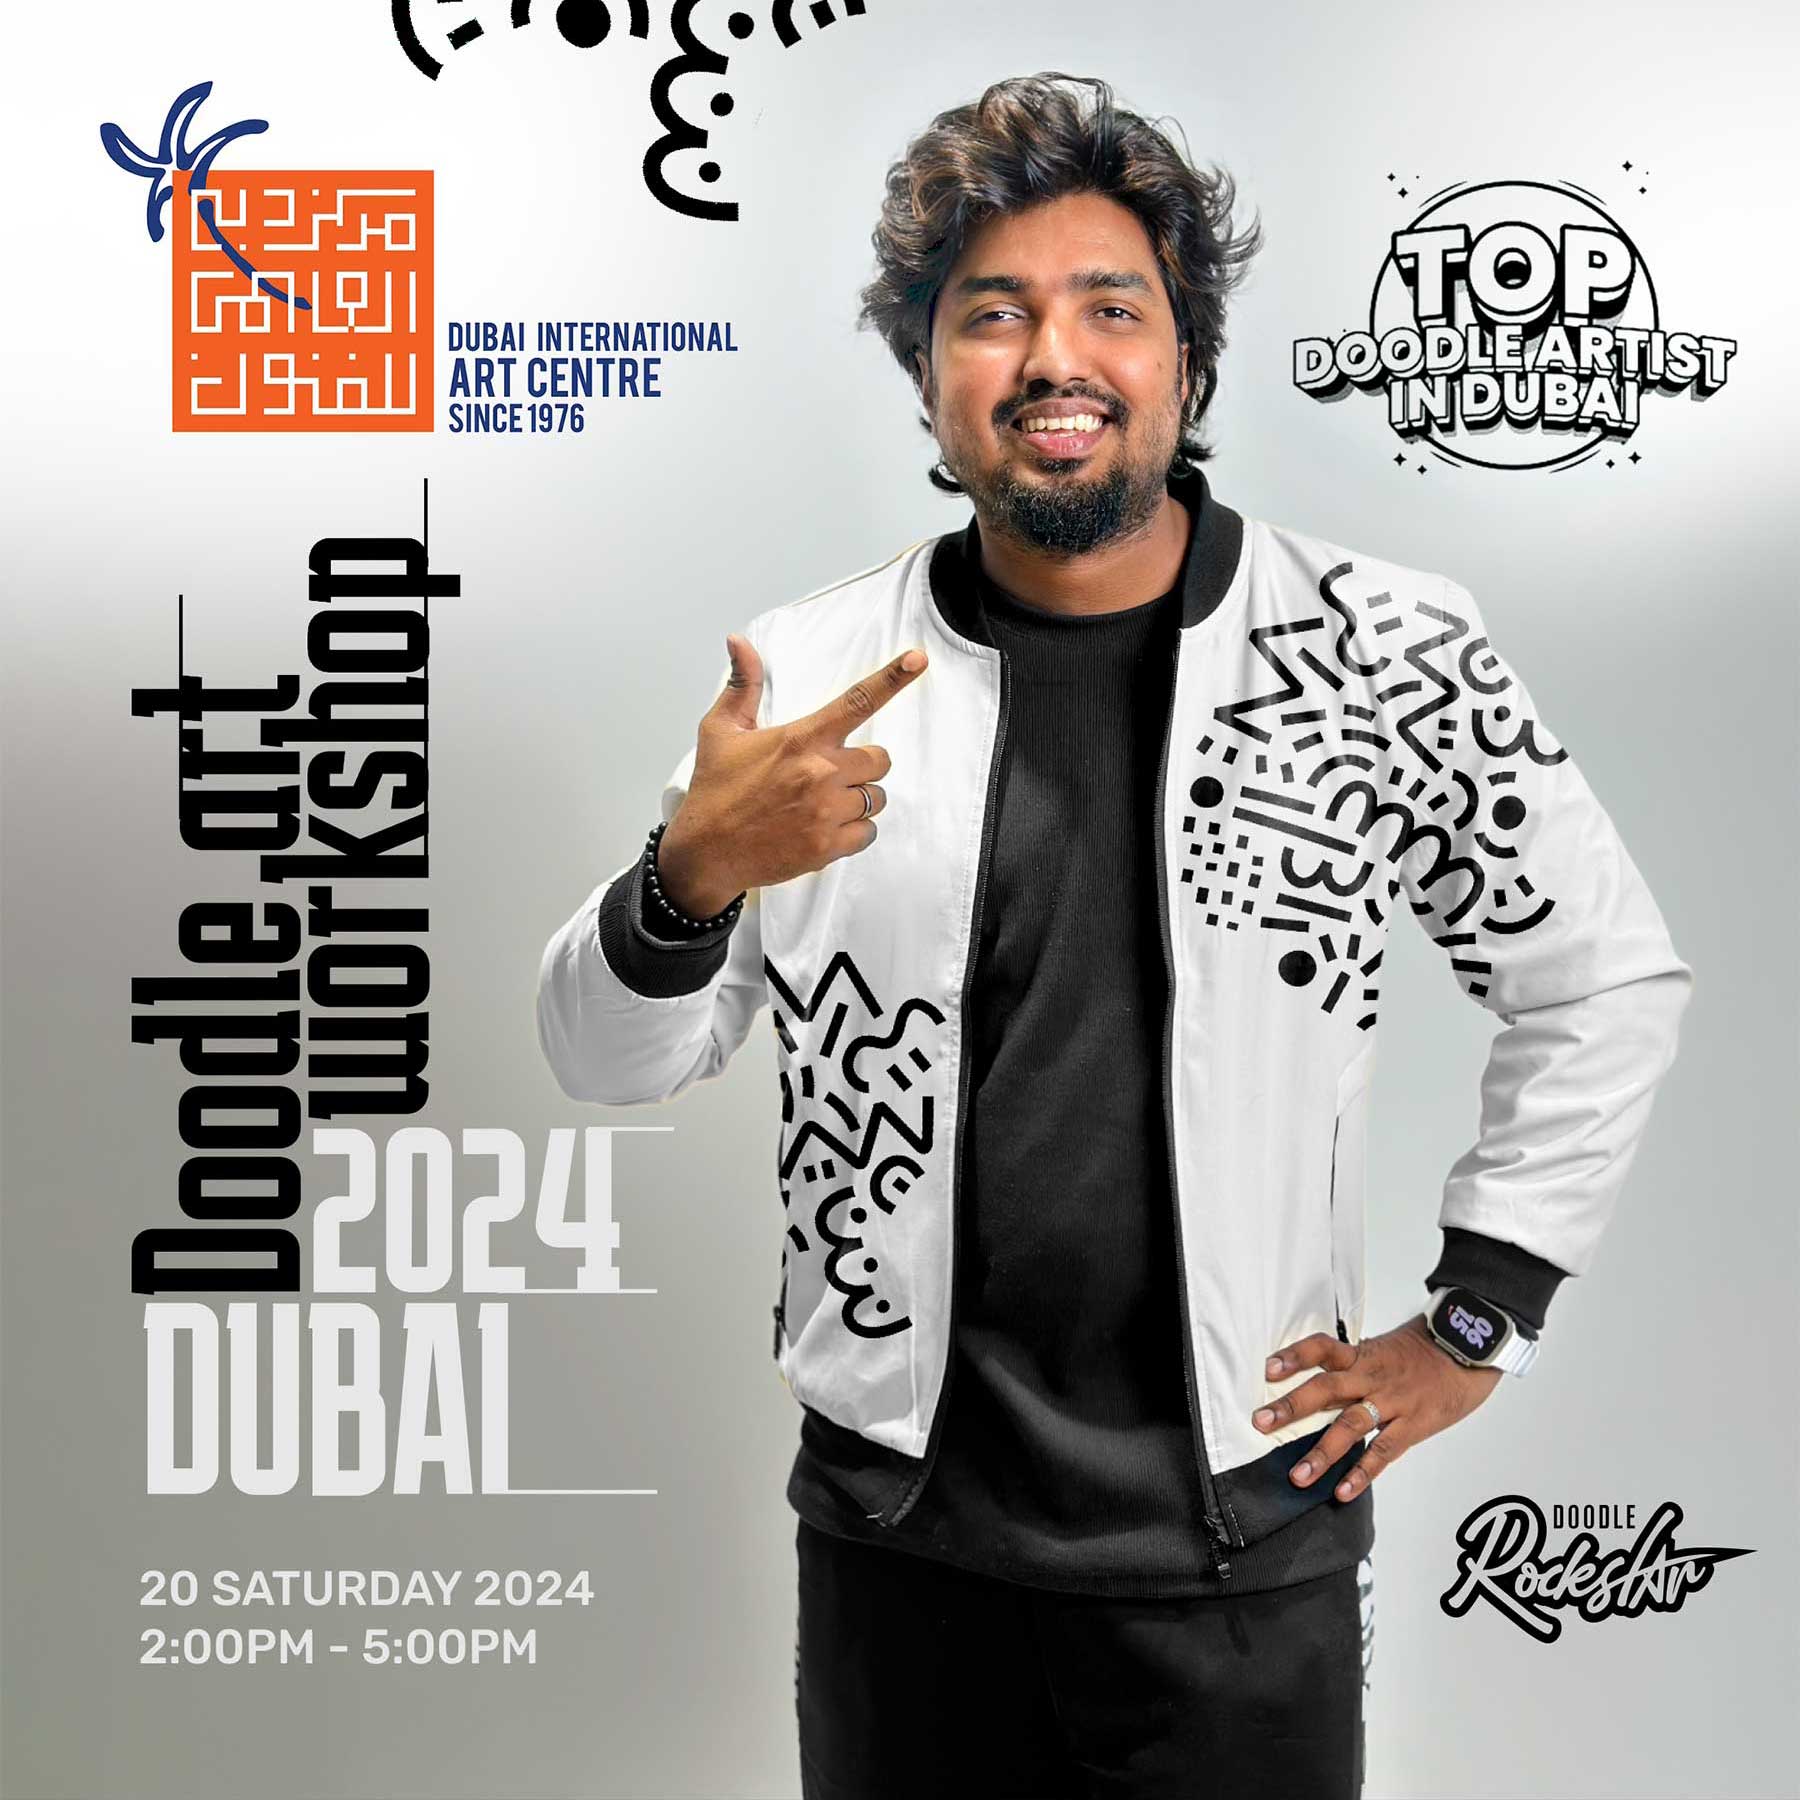 Doodle Workshop 2024 - Dubai International Art Center